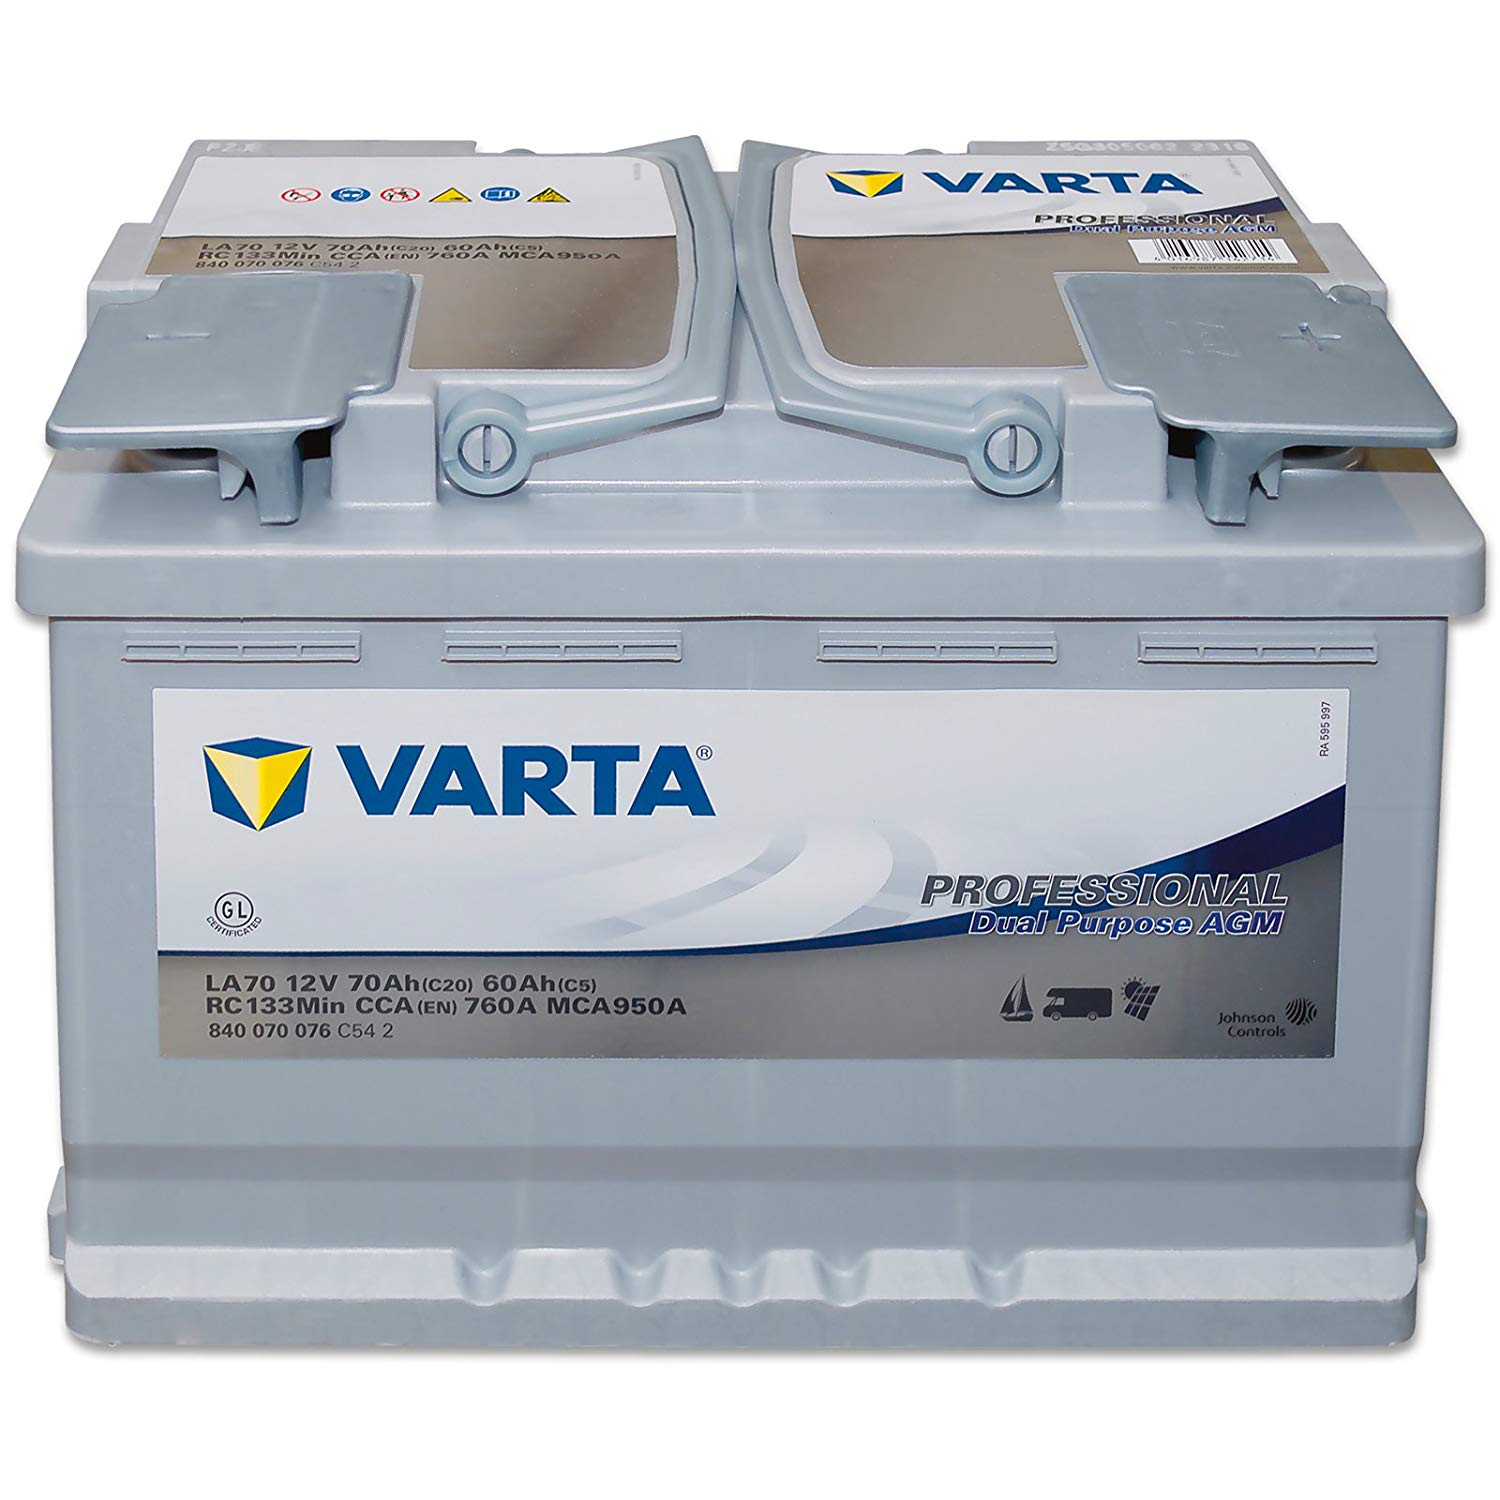 VARTA LA70 PROFESSIONAL Dual Purpose 840 070 076 AGM Batteria 70Ah